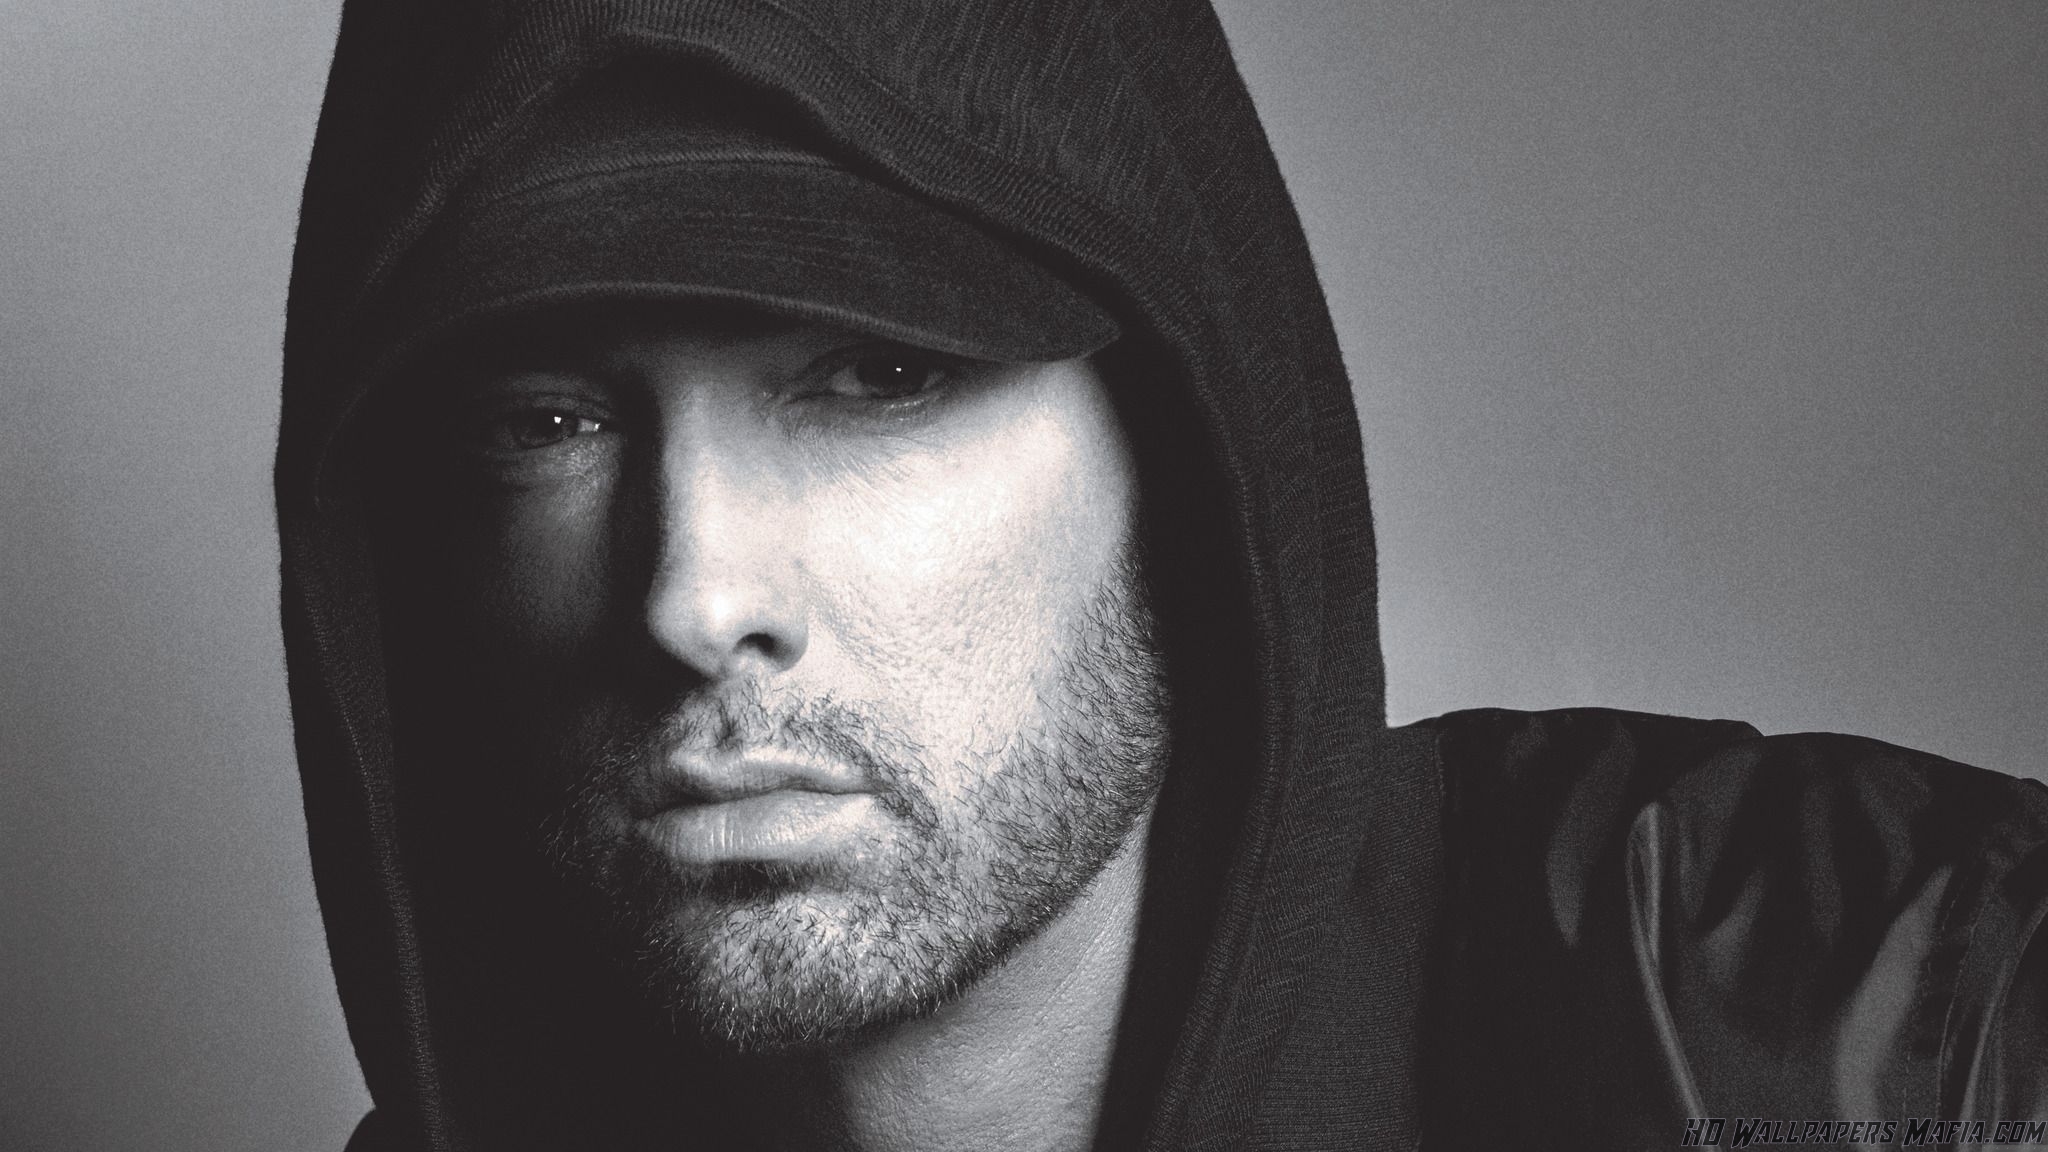 30 Eminem 2018 Wallpapers On Wallpapersafari Images, Photos, Reviews